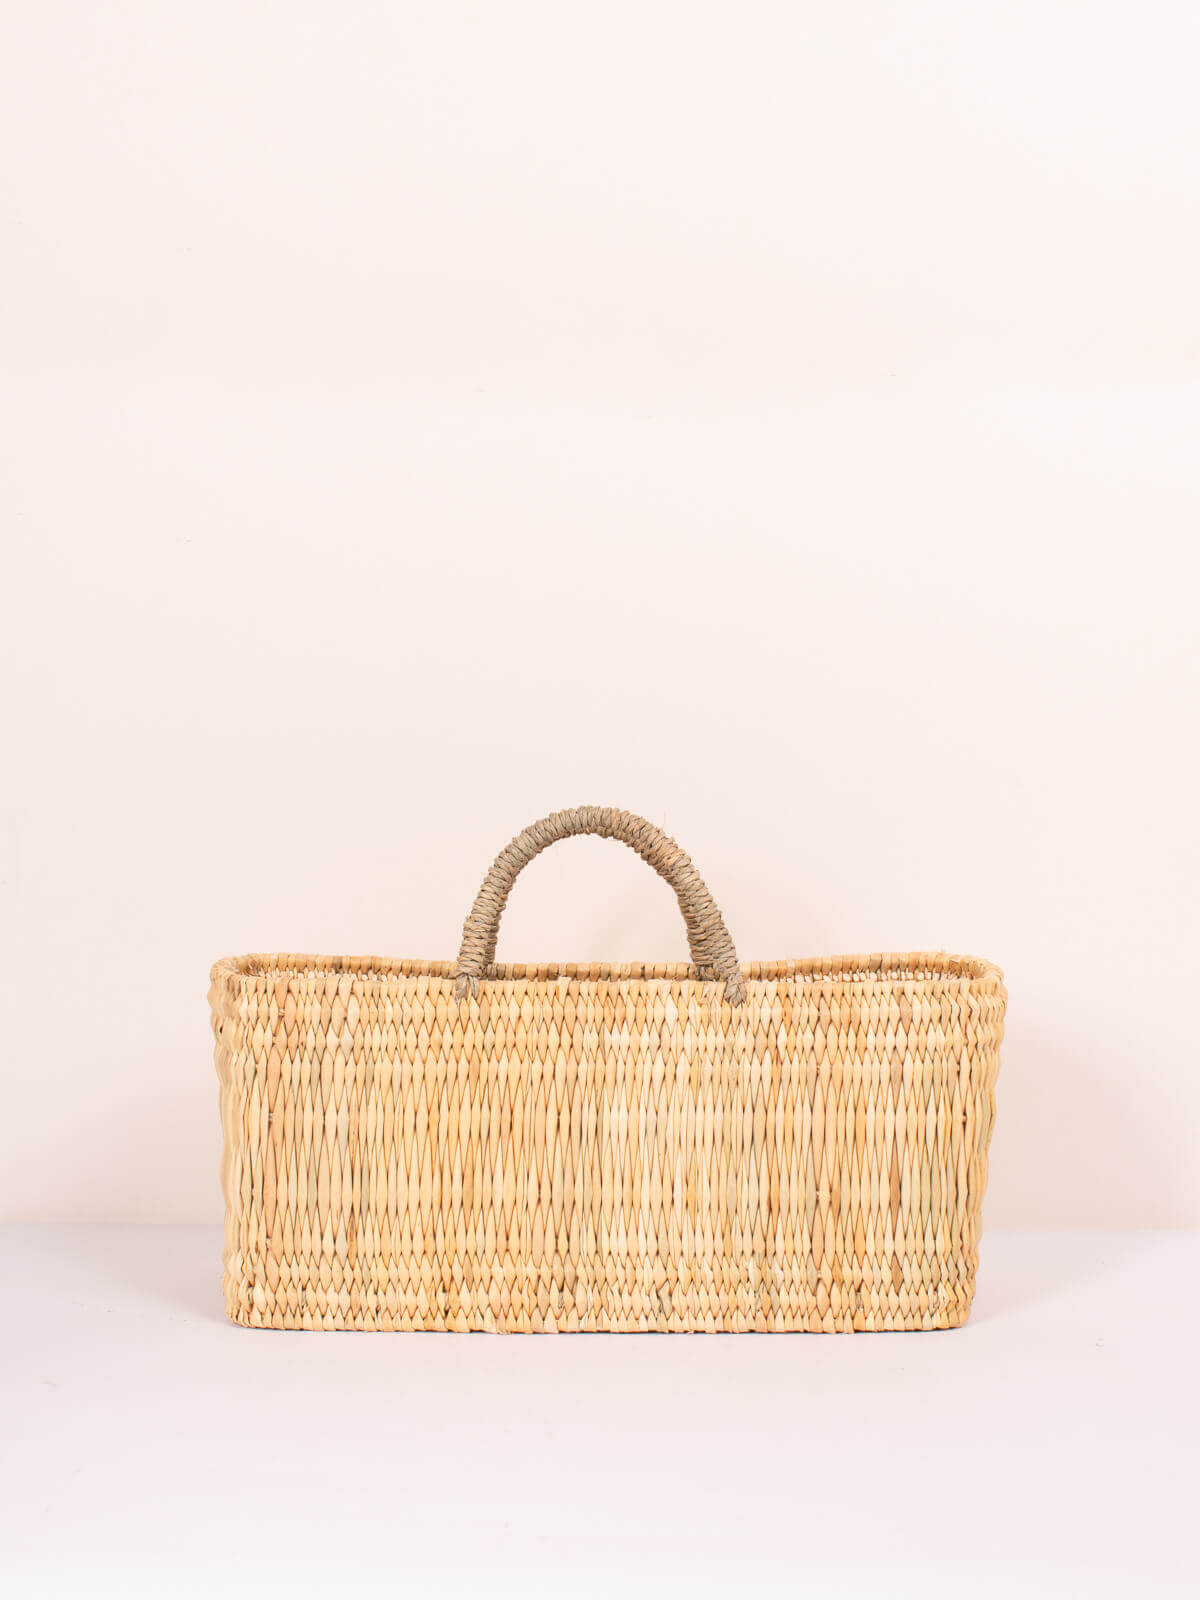 Reed Storage Baskets